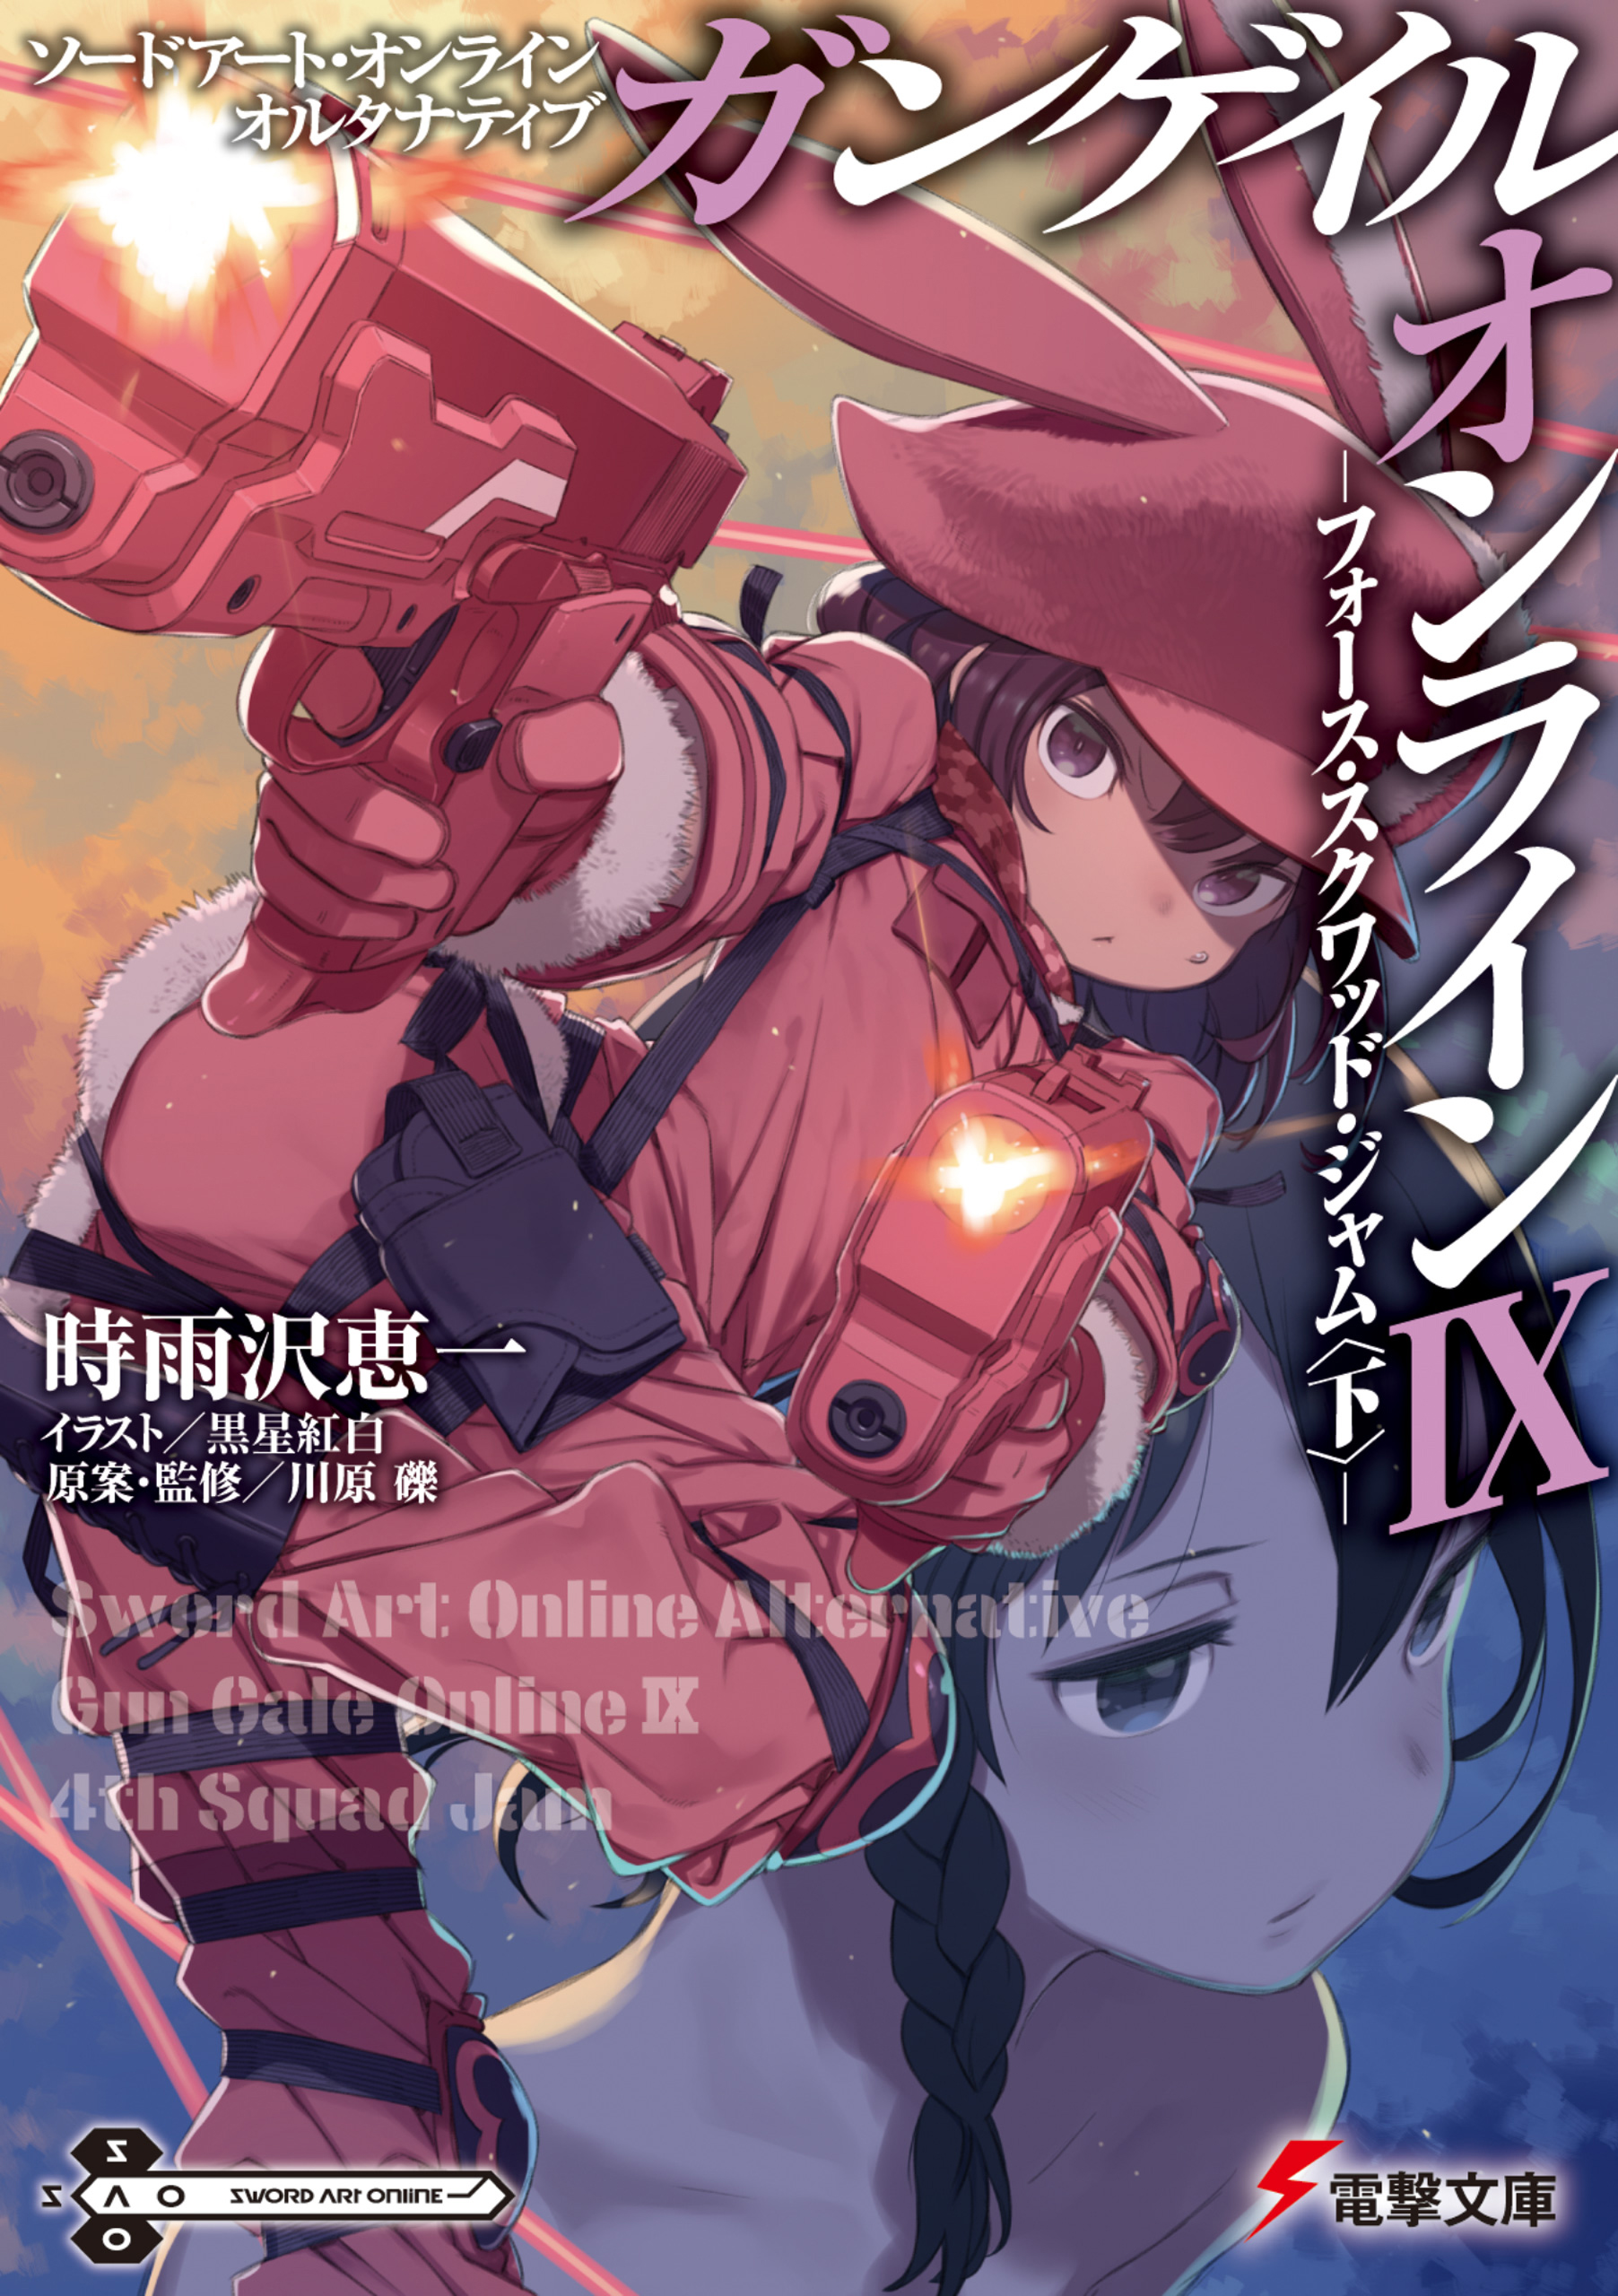 Characters appearing in Sword Art Online Alternative: Gun Gale Online Anime